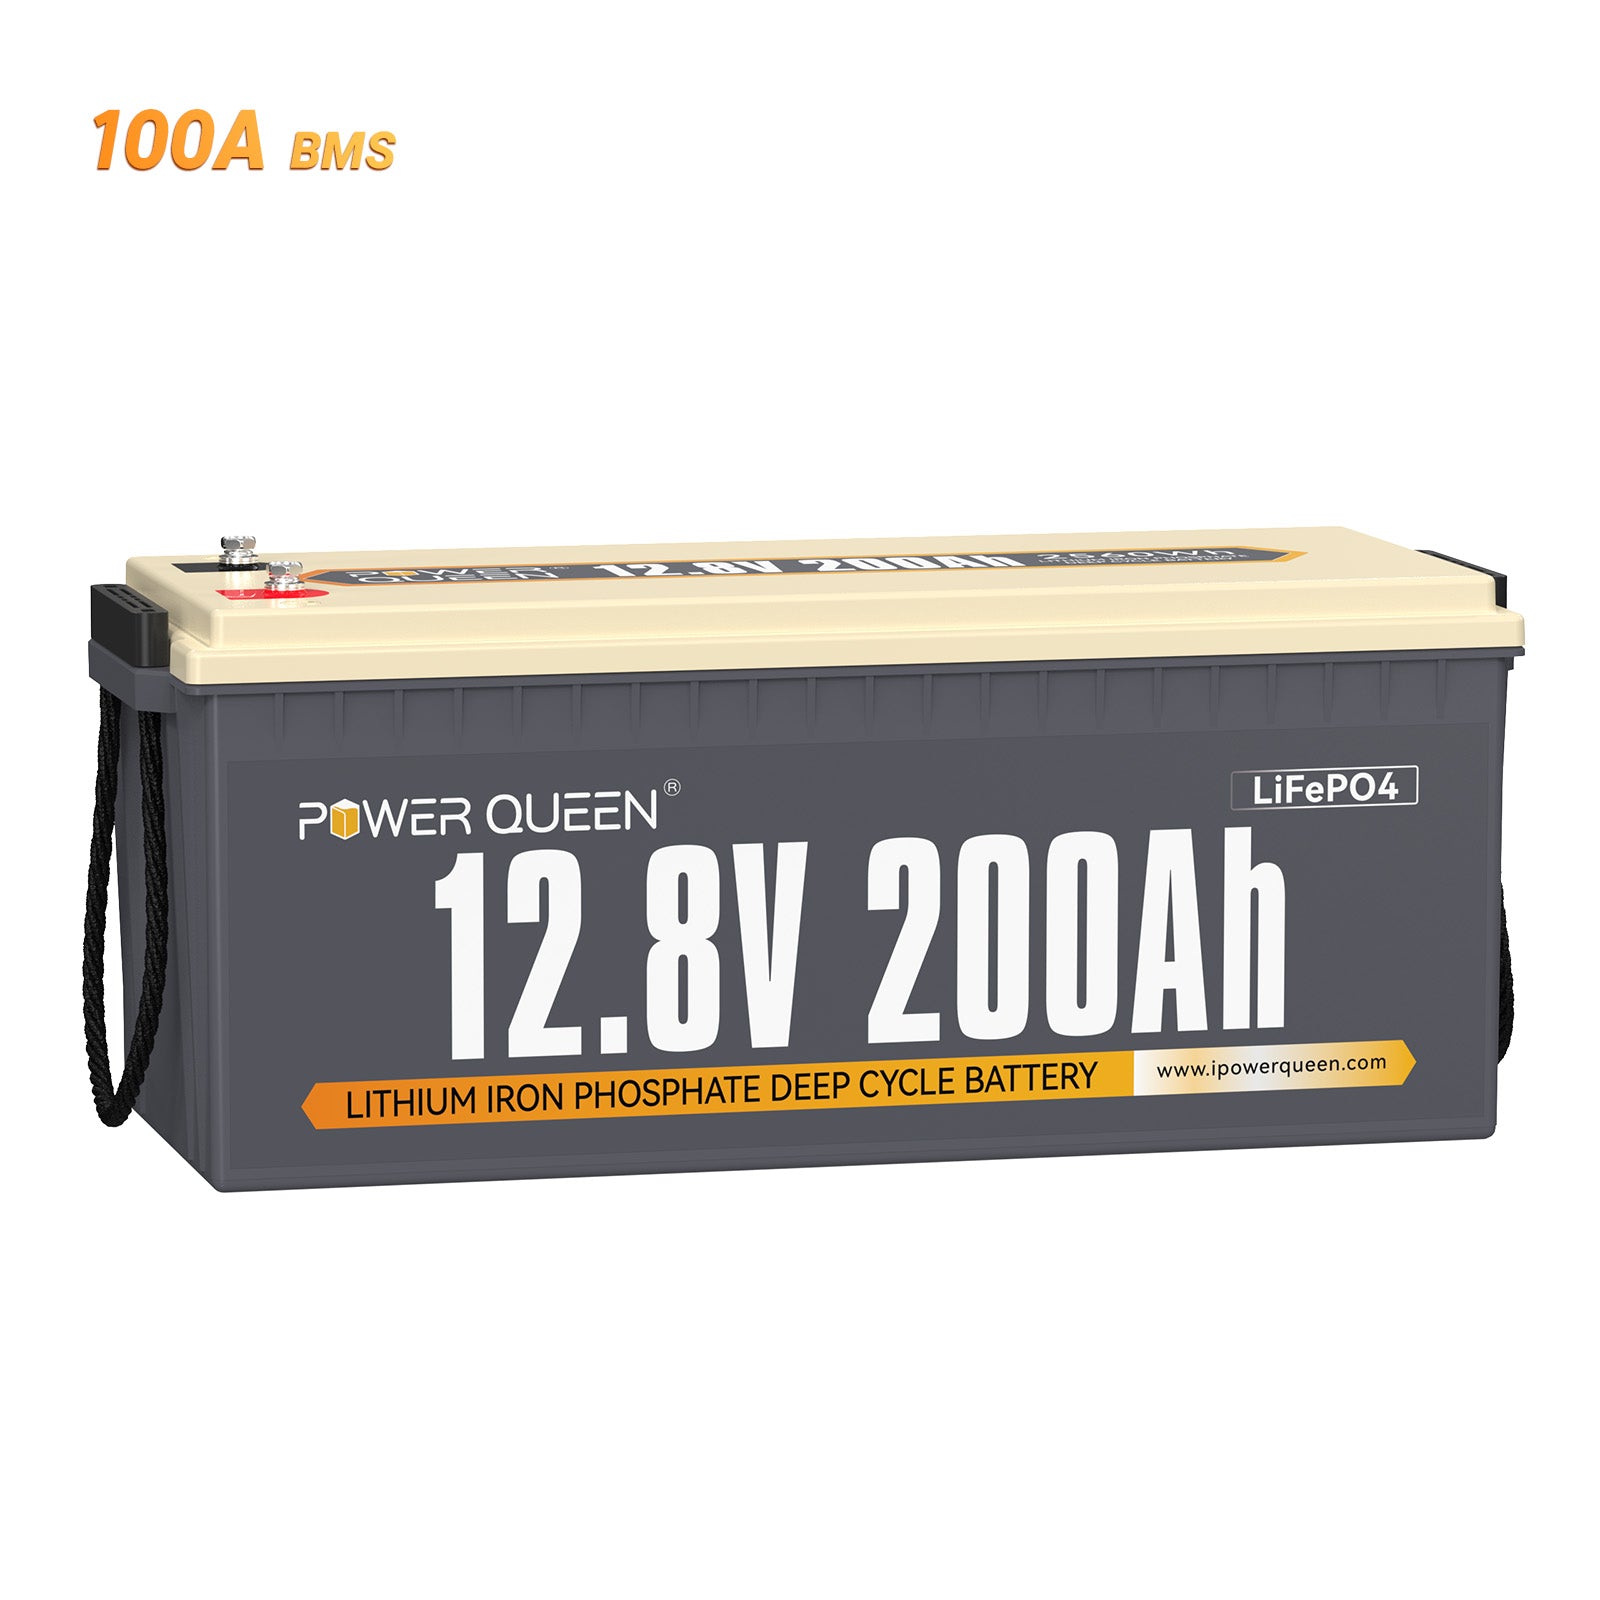 Batería Power Queen LiFePO4 de 12,8 V y 200 Ah, BMS de 100 A incorporado